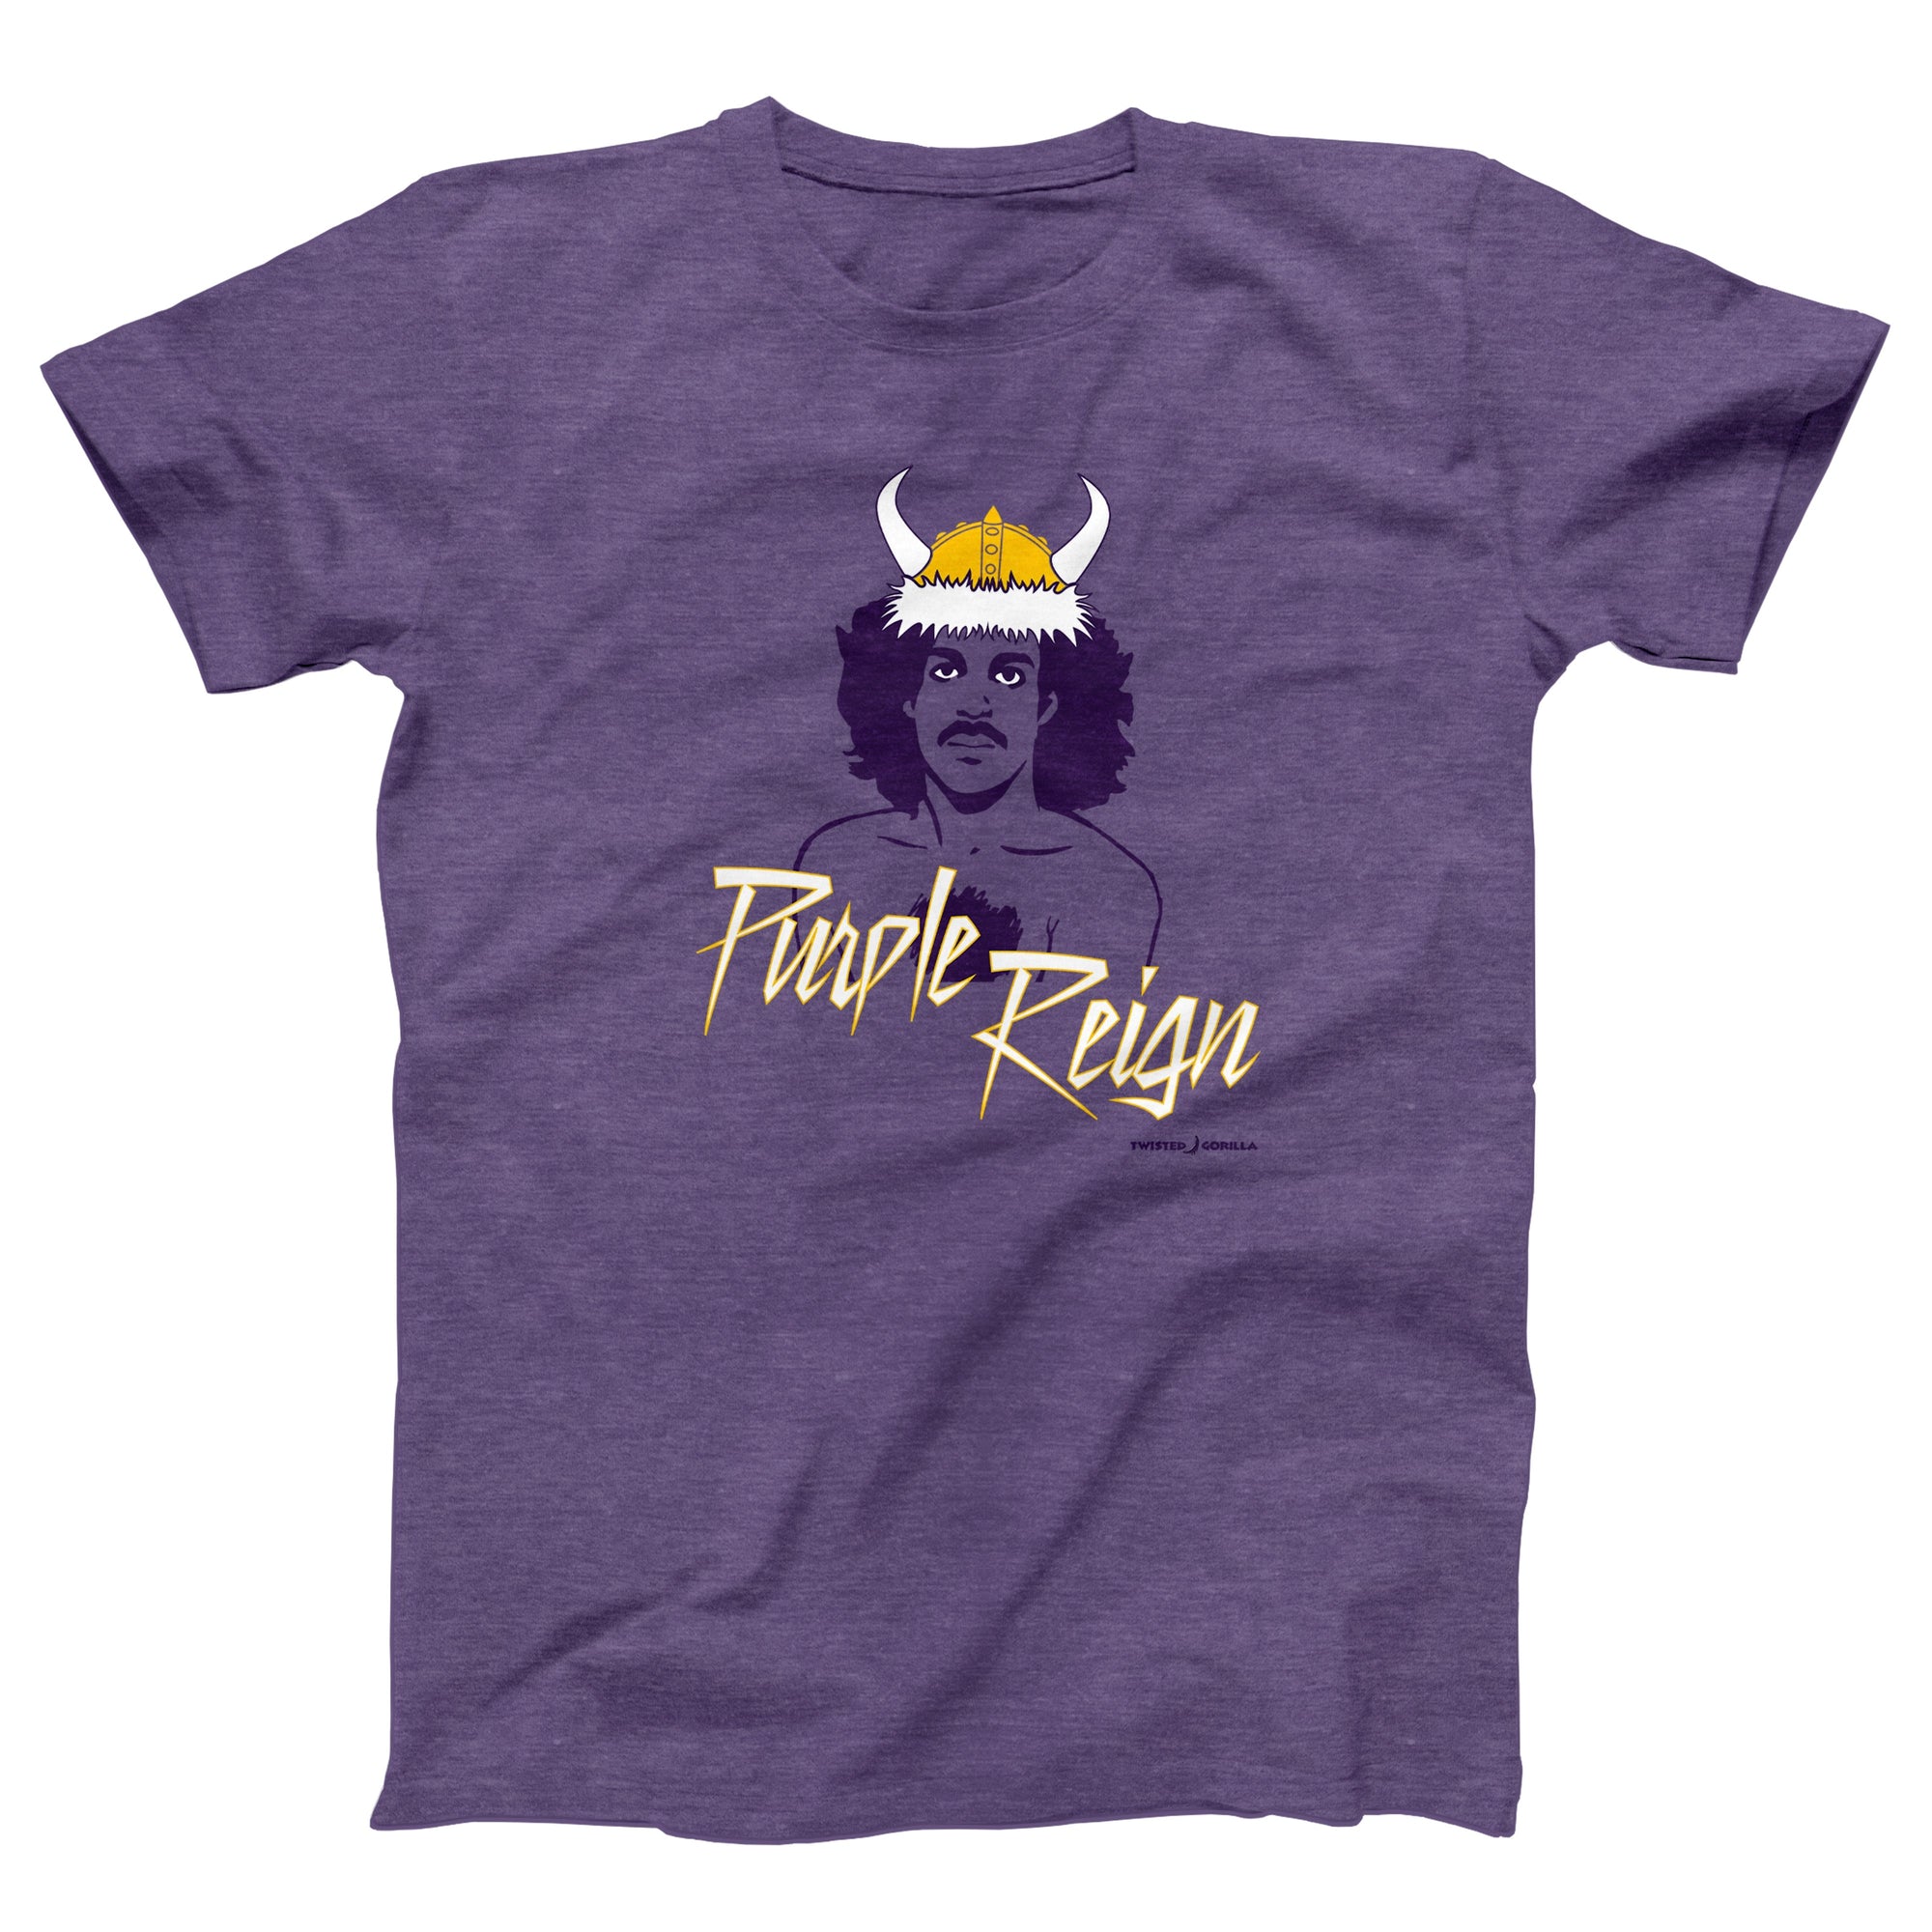 Purple Reign Adult Unisex T-Shirt - Twisted Gorilla